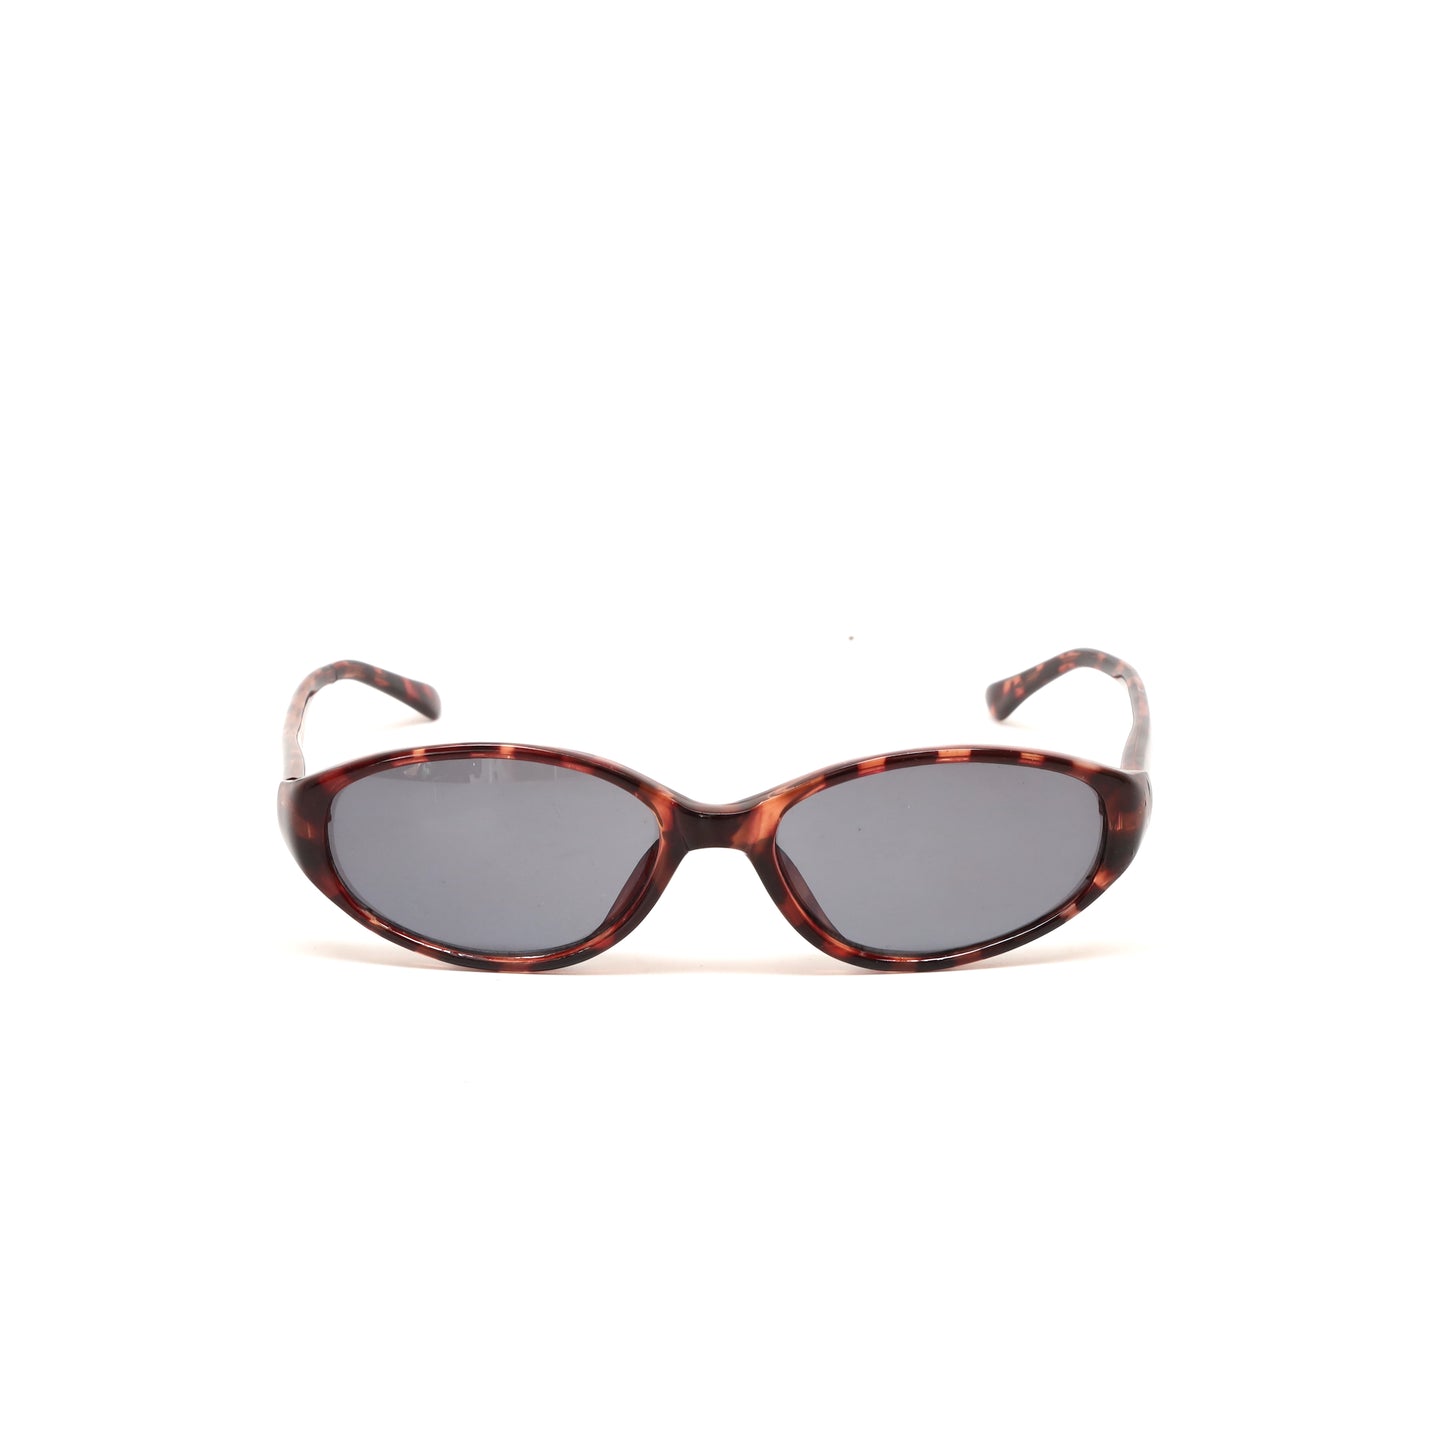 Vintage 1990s Chic Standard Oval Frame Sunglasses - Tortoise